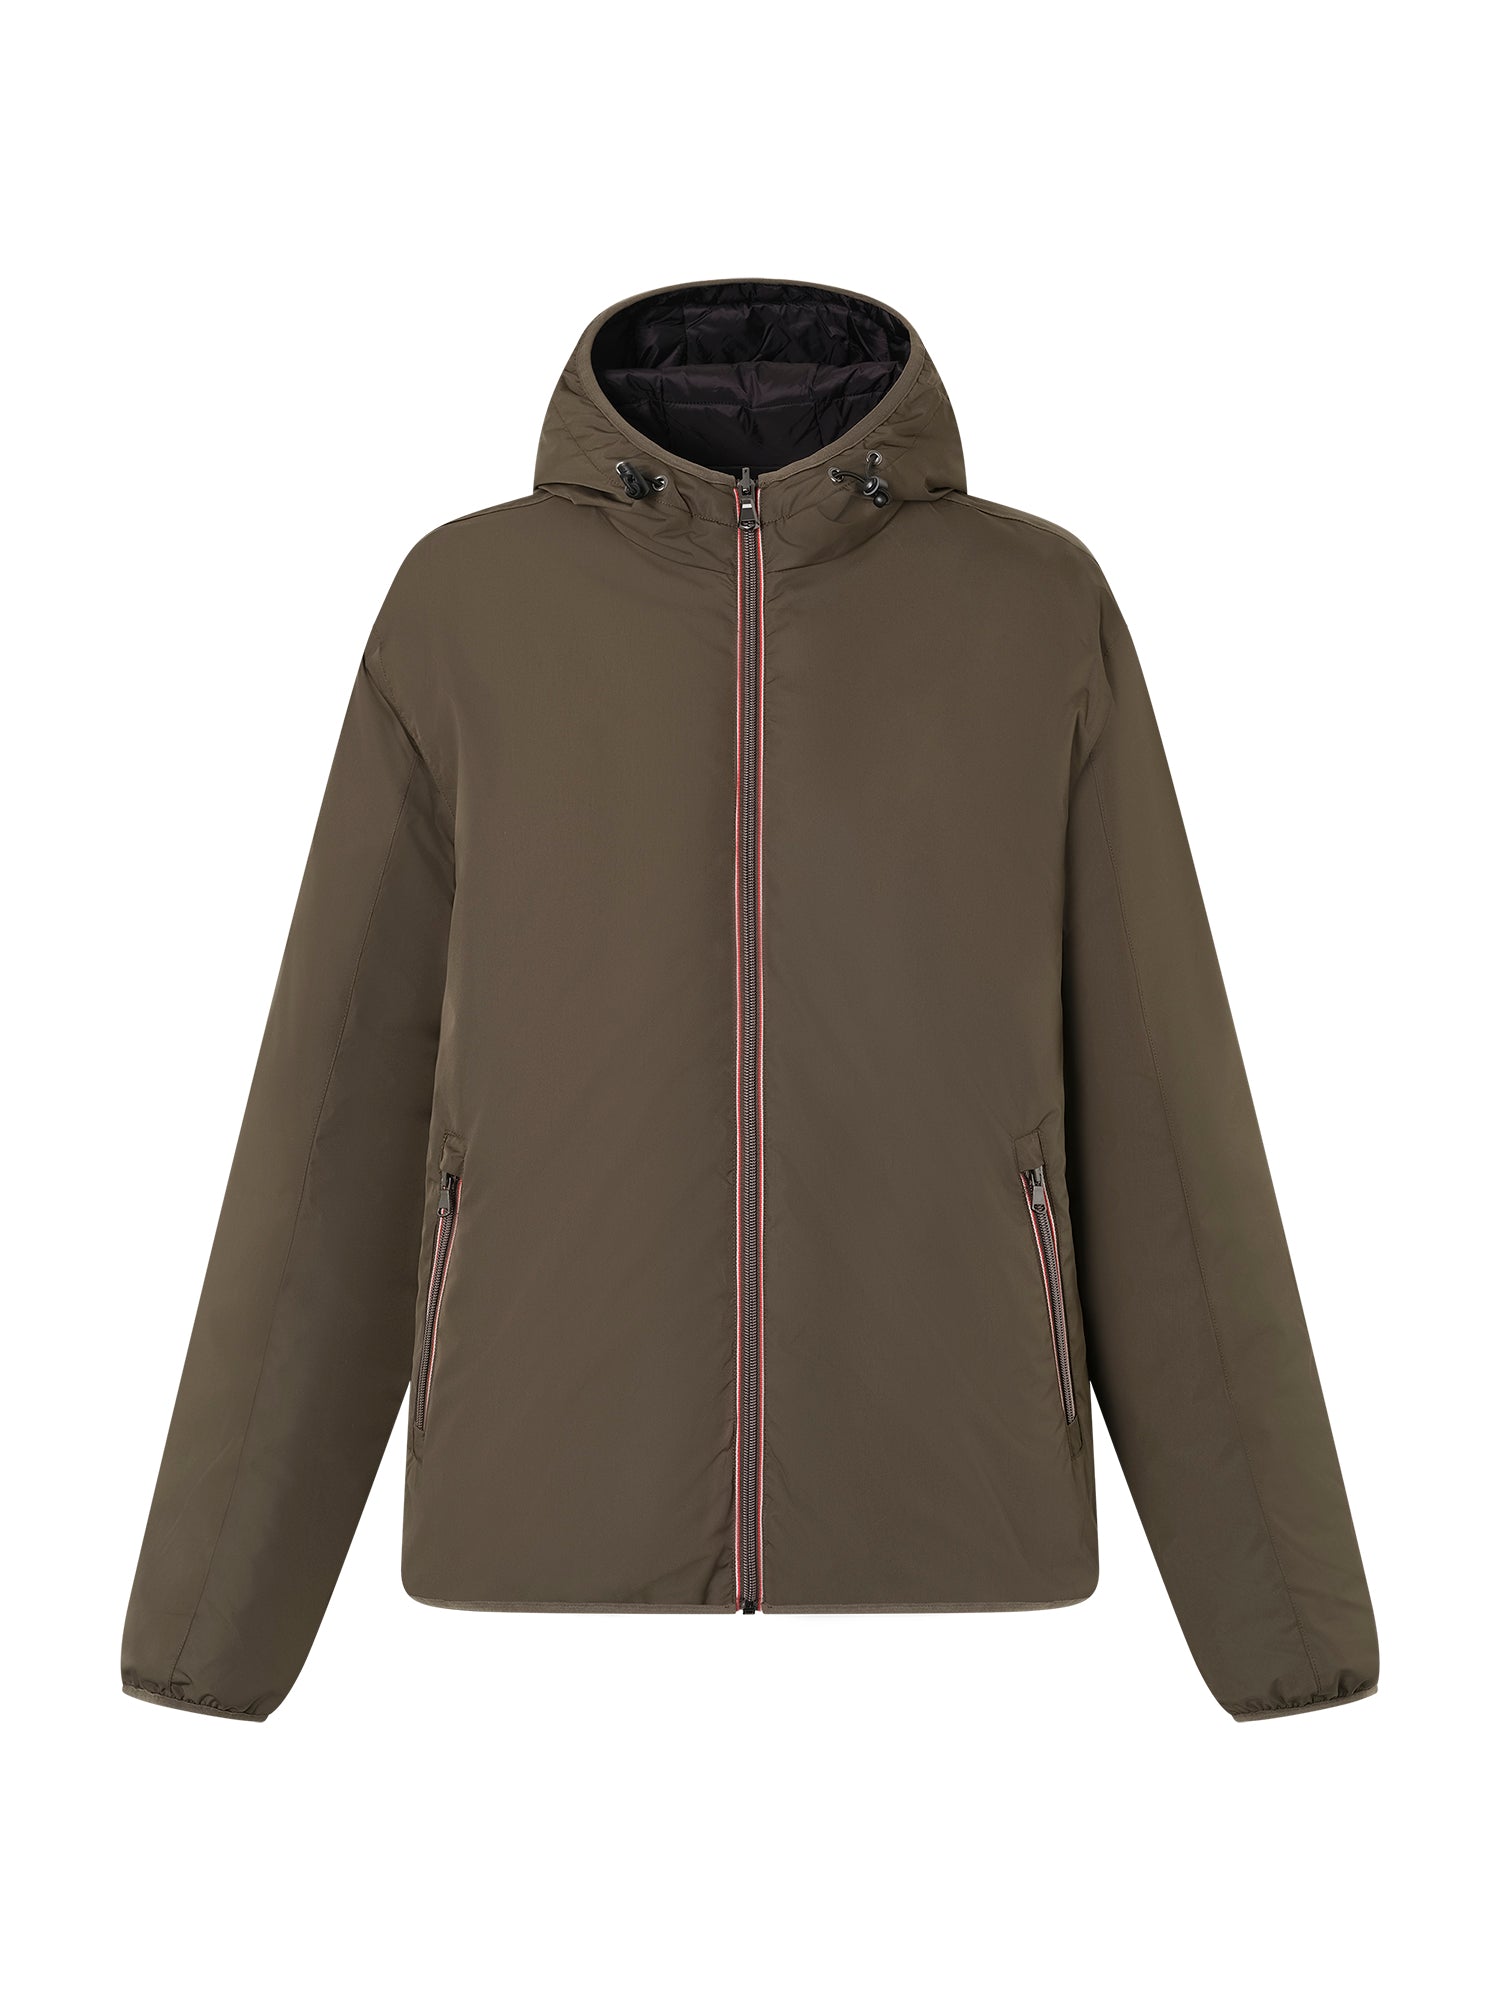 Olive/Black Reversible Hooded Puffer Jacket